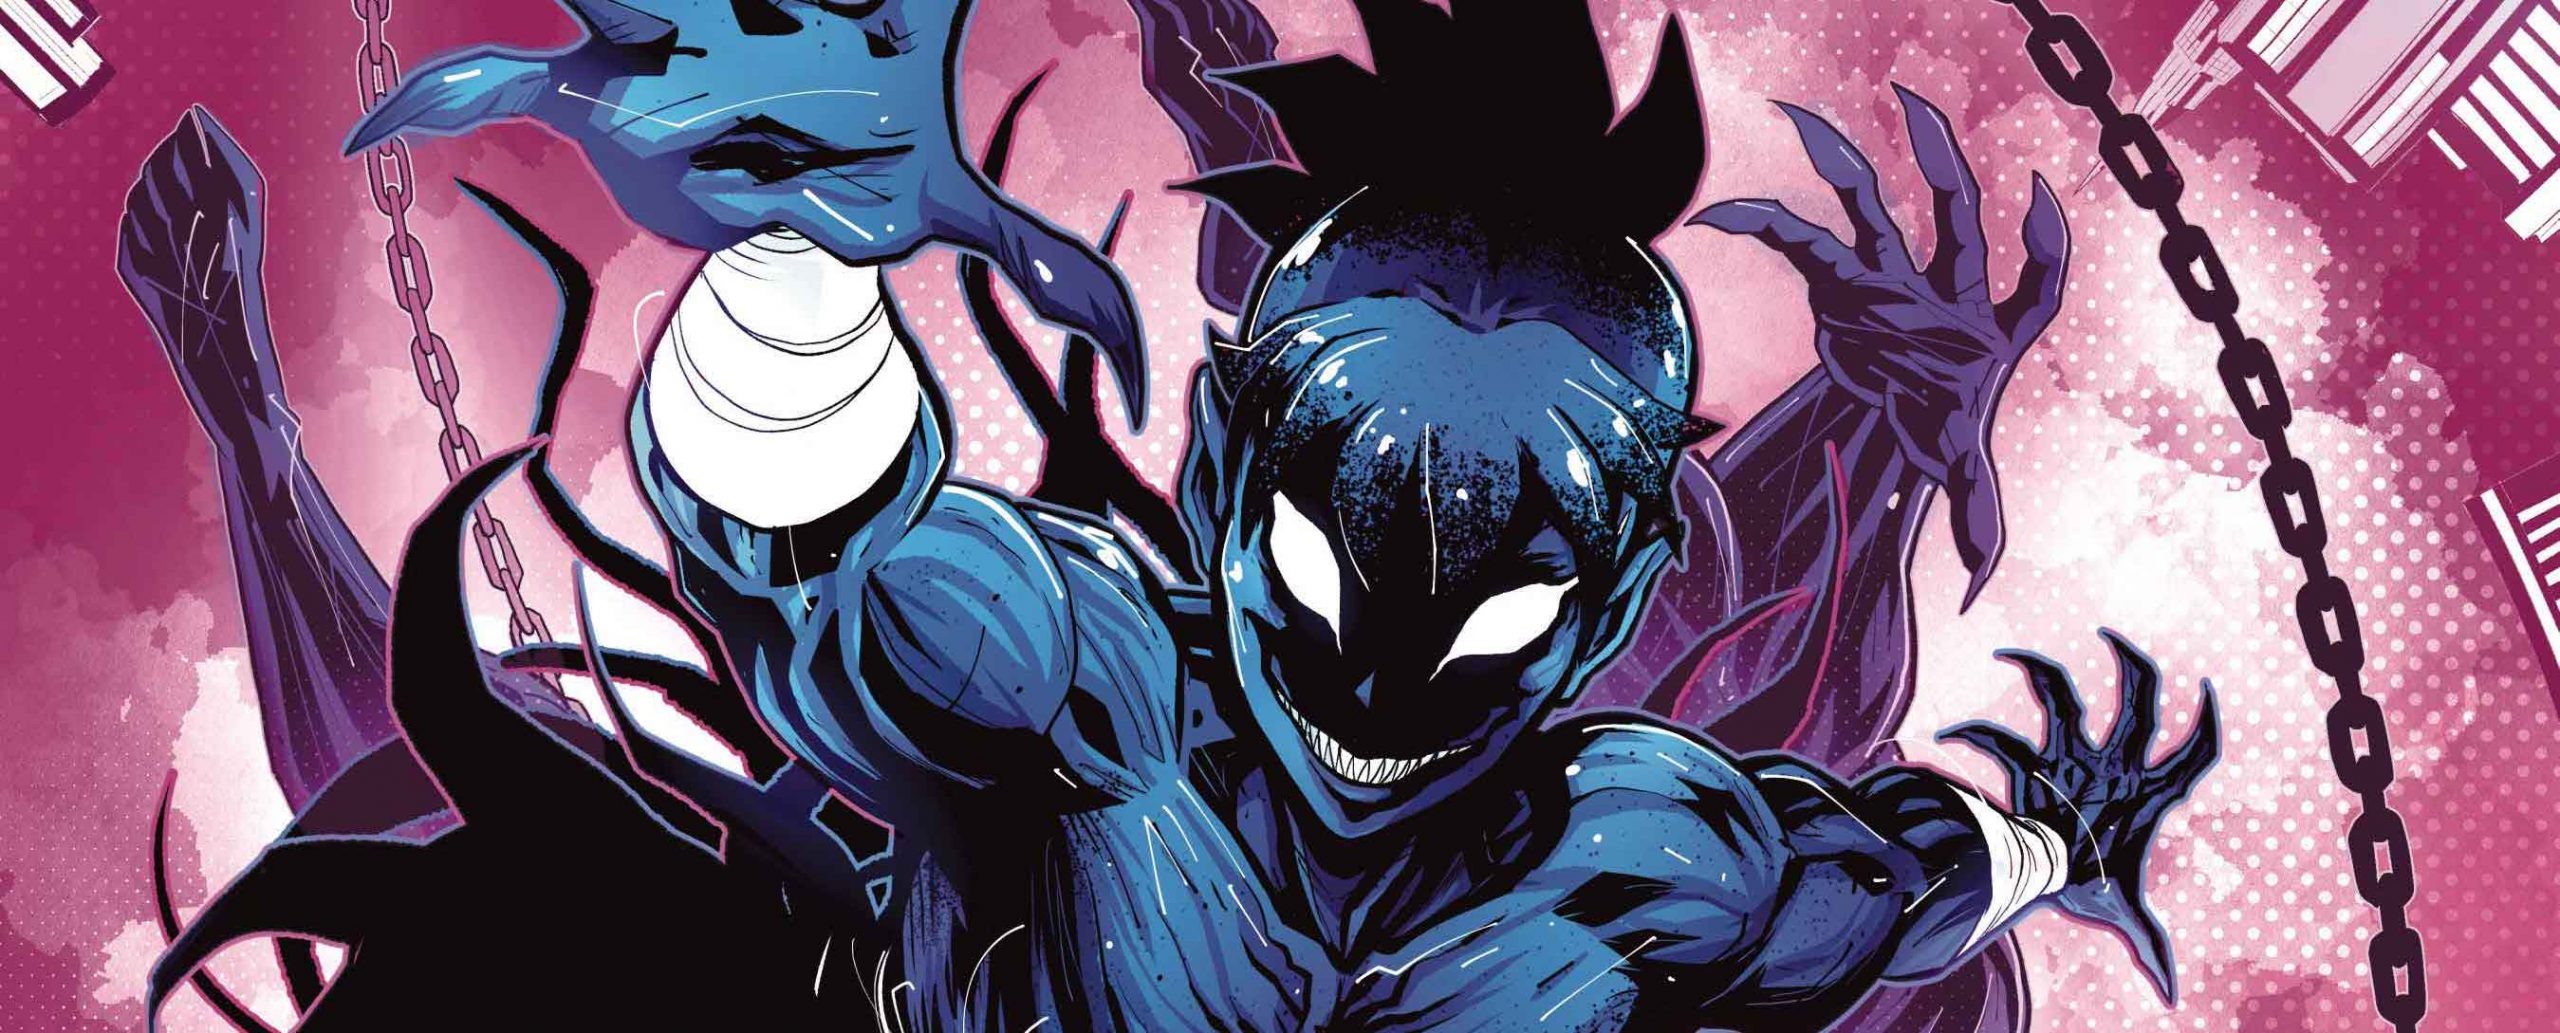 Meet new hero Kid Venom emerging from 'Death of the Venomverse' #2